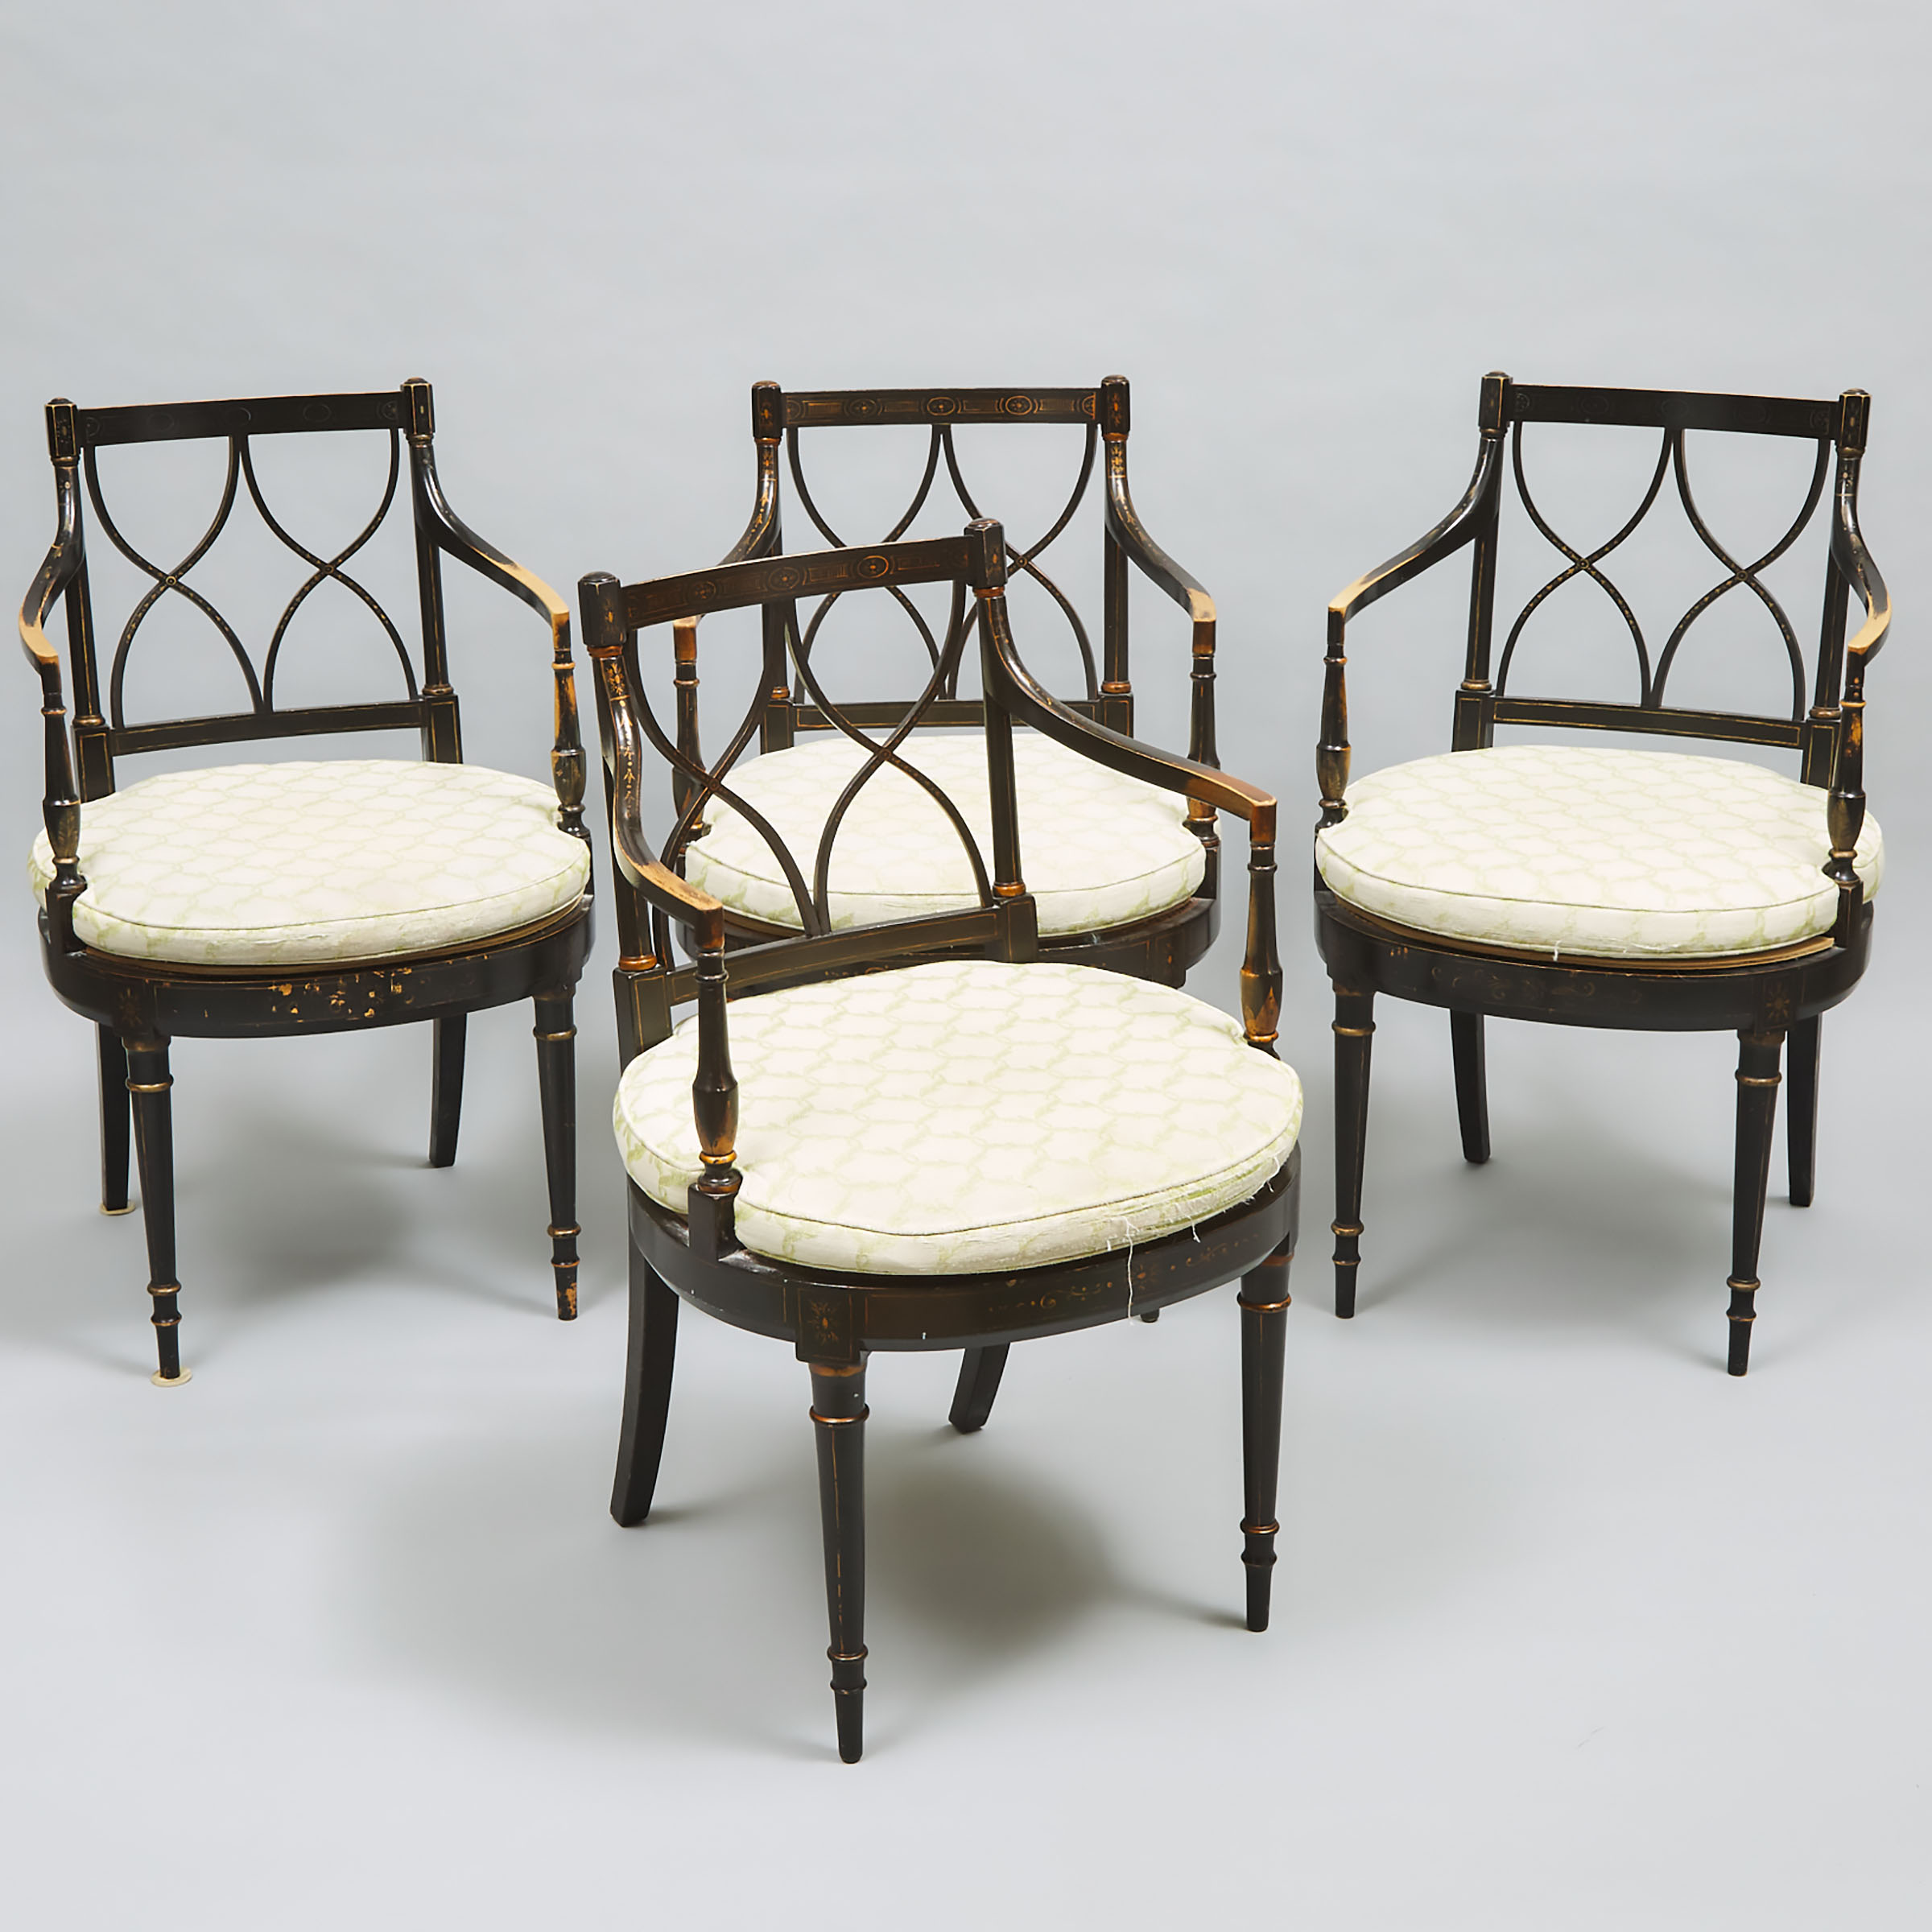 Set of Four Regency Style Parcel Gilt Ebonized Open Armchairs, early-mid 20th century